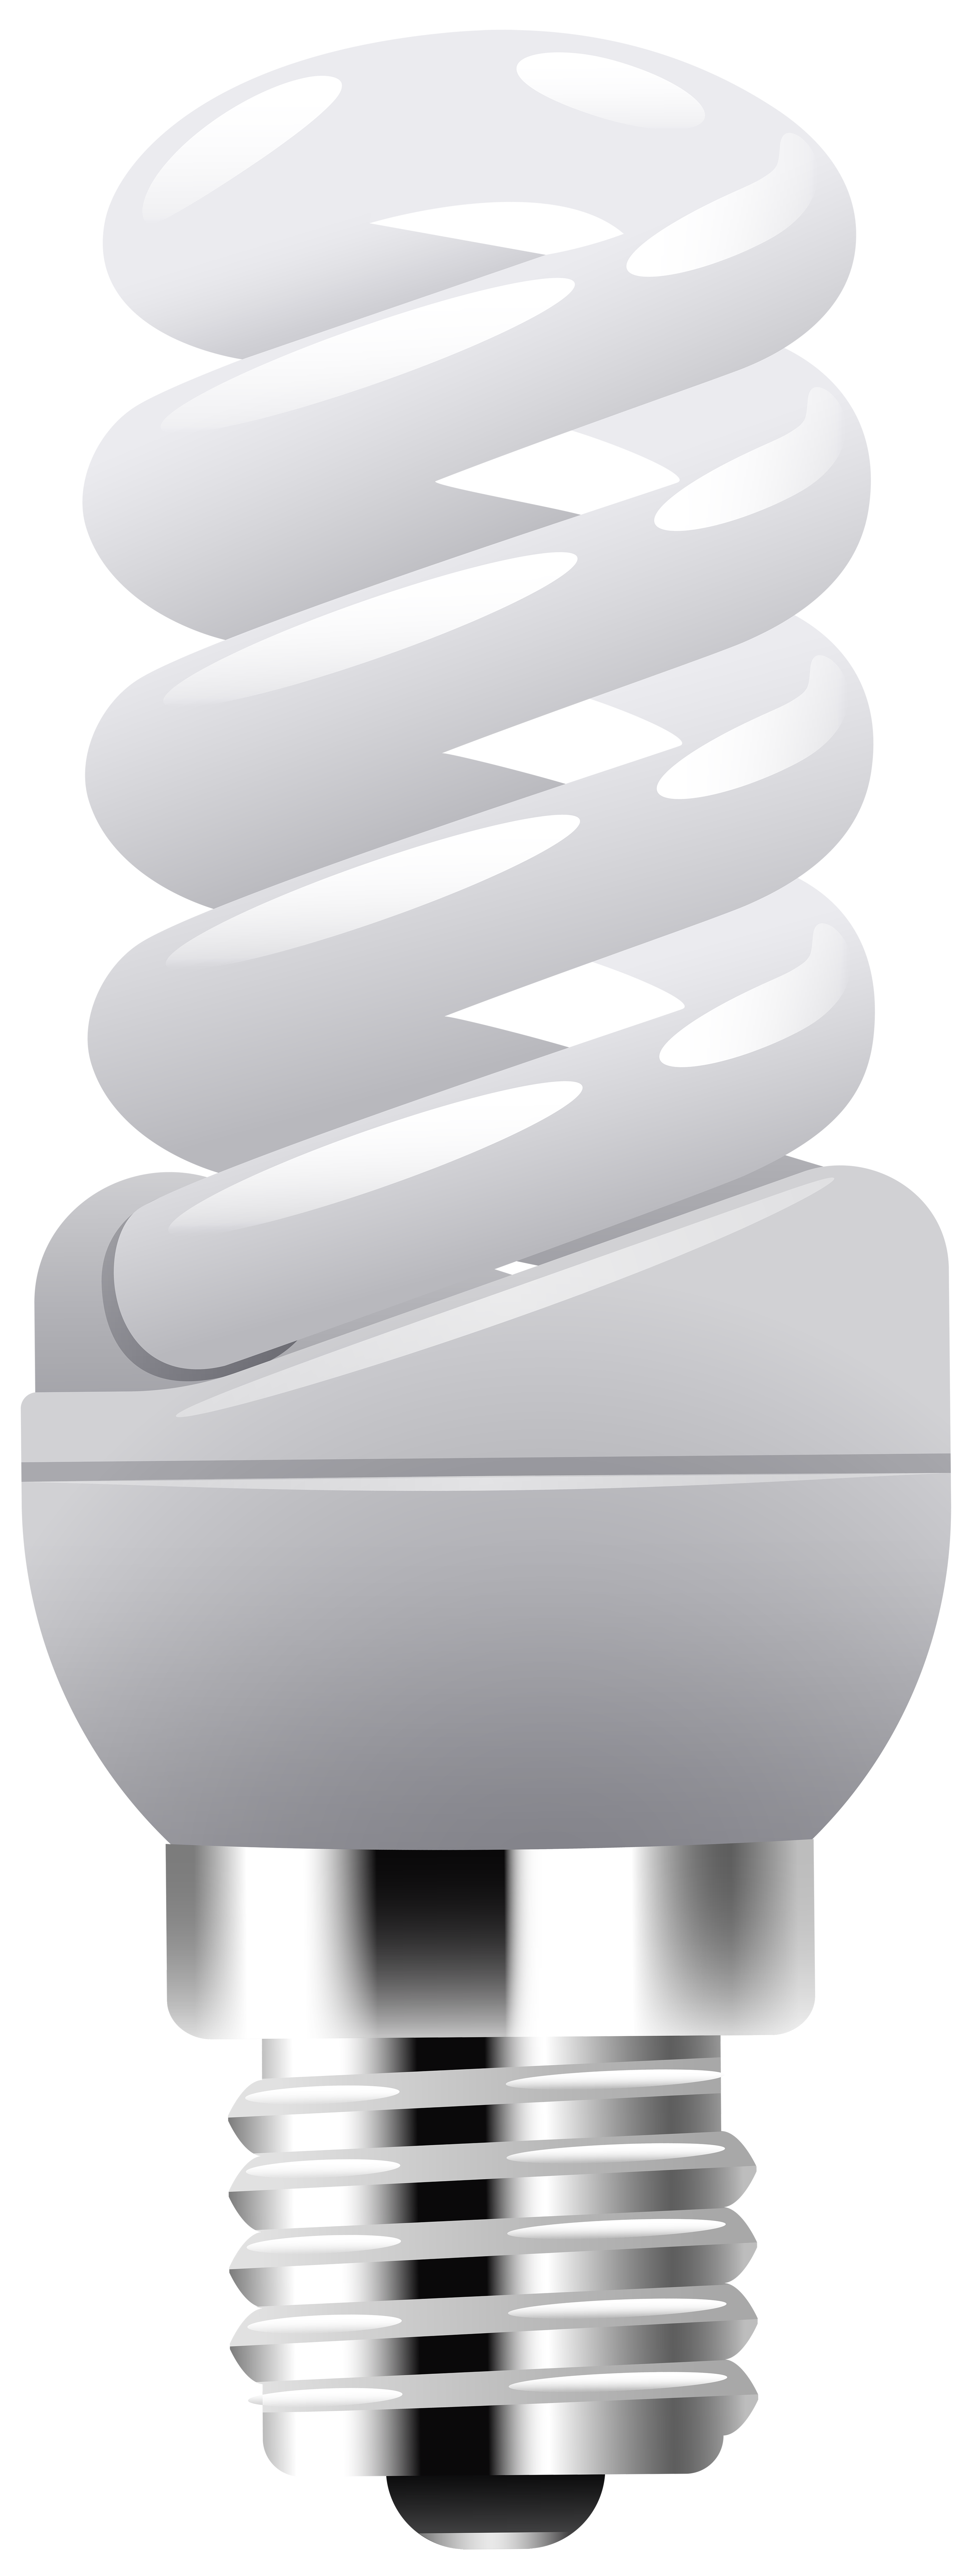 Energy Saving Bulb PNG Clip Art - Best WEB Clipart